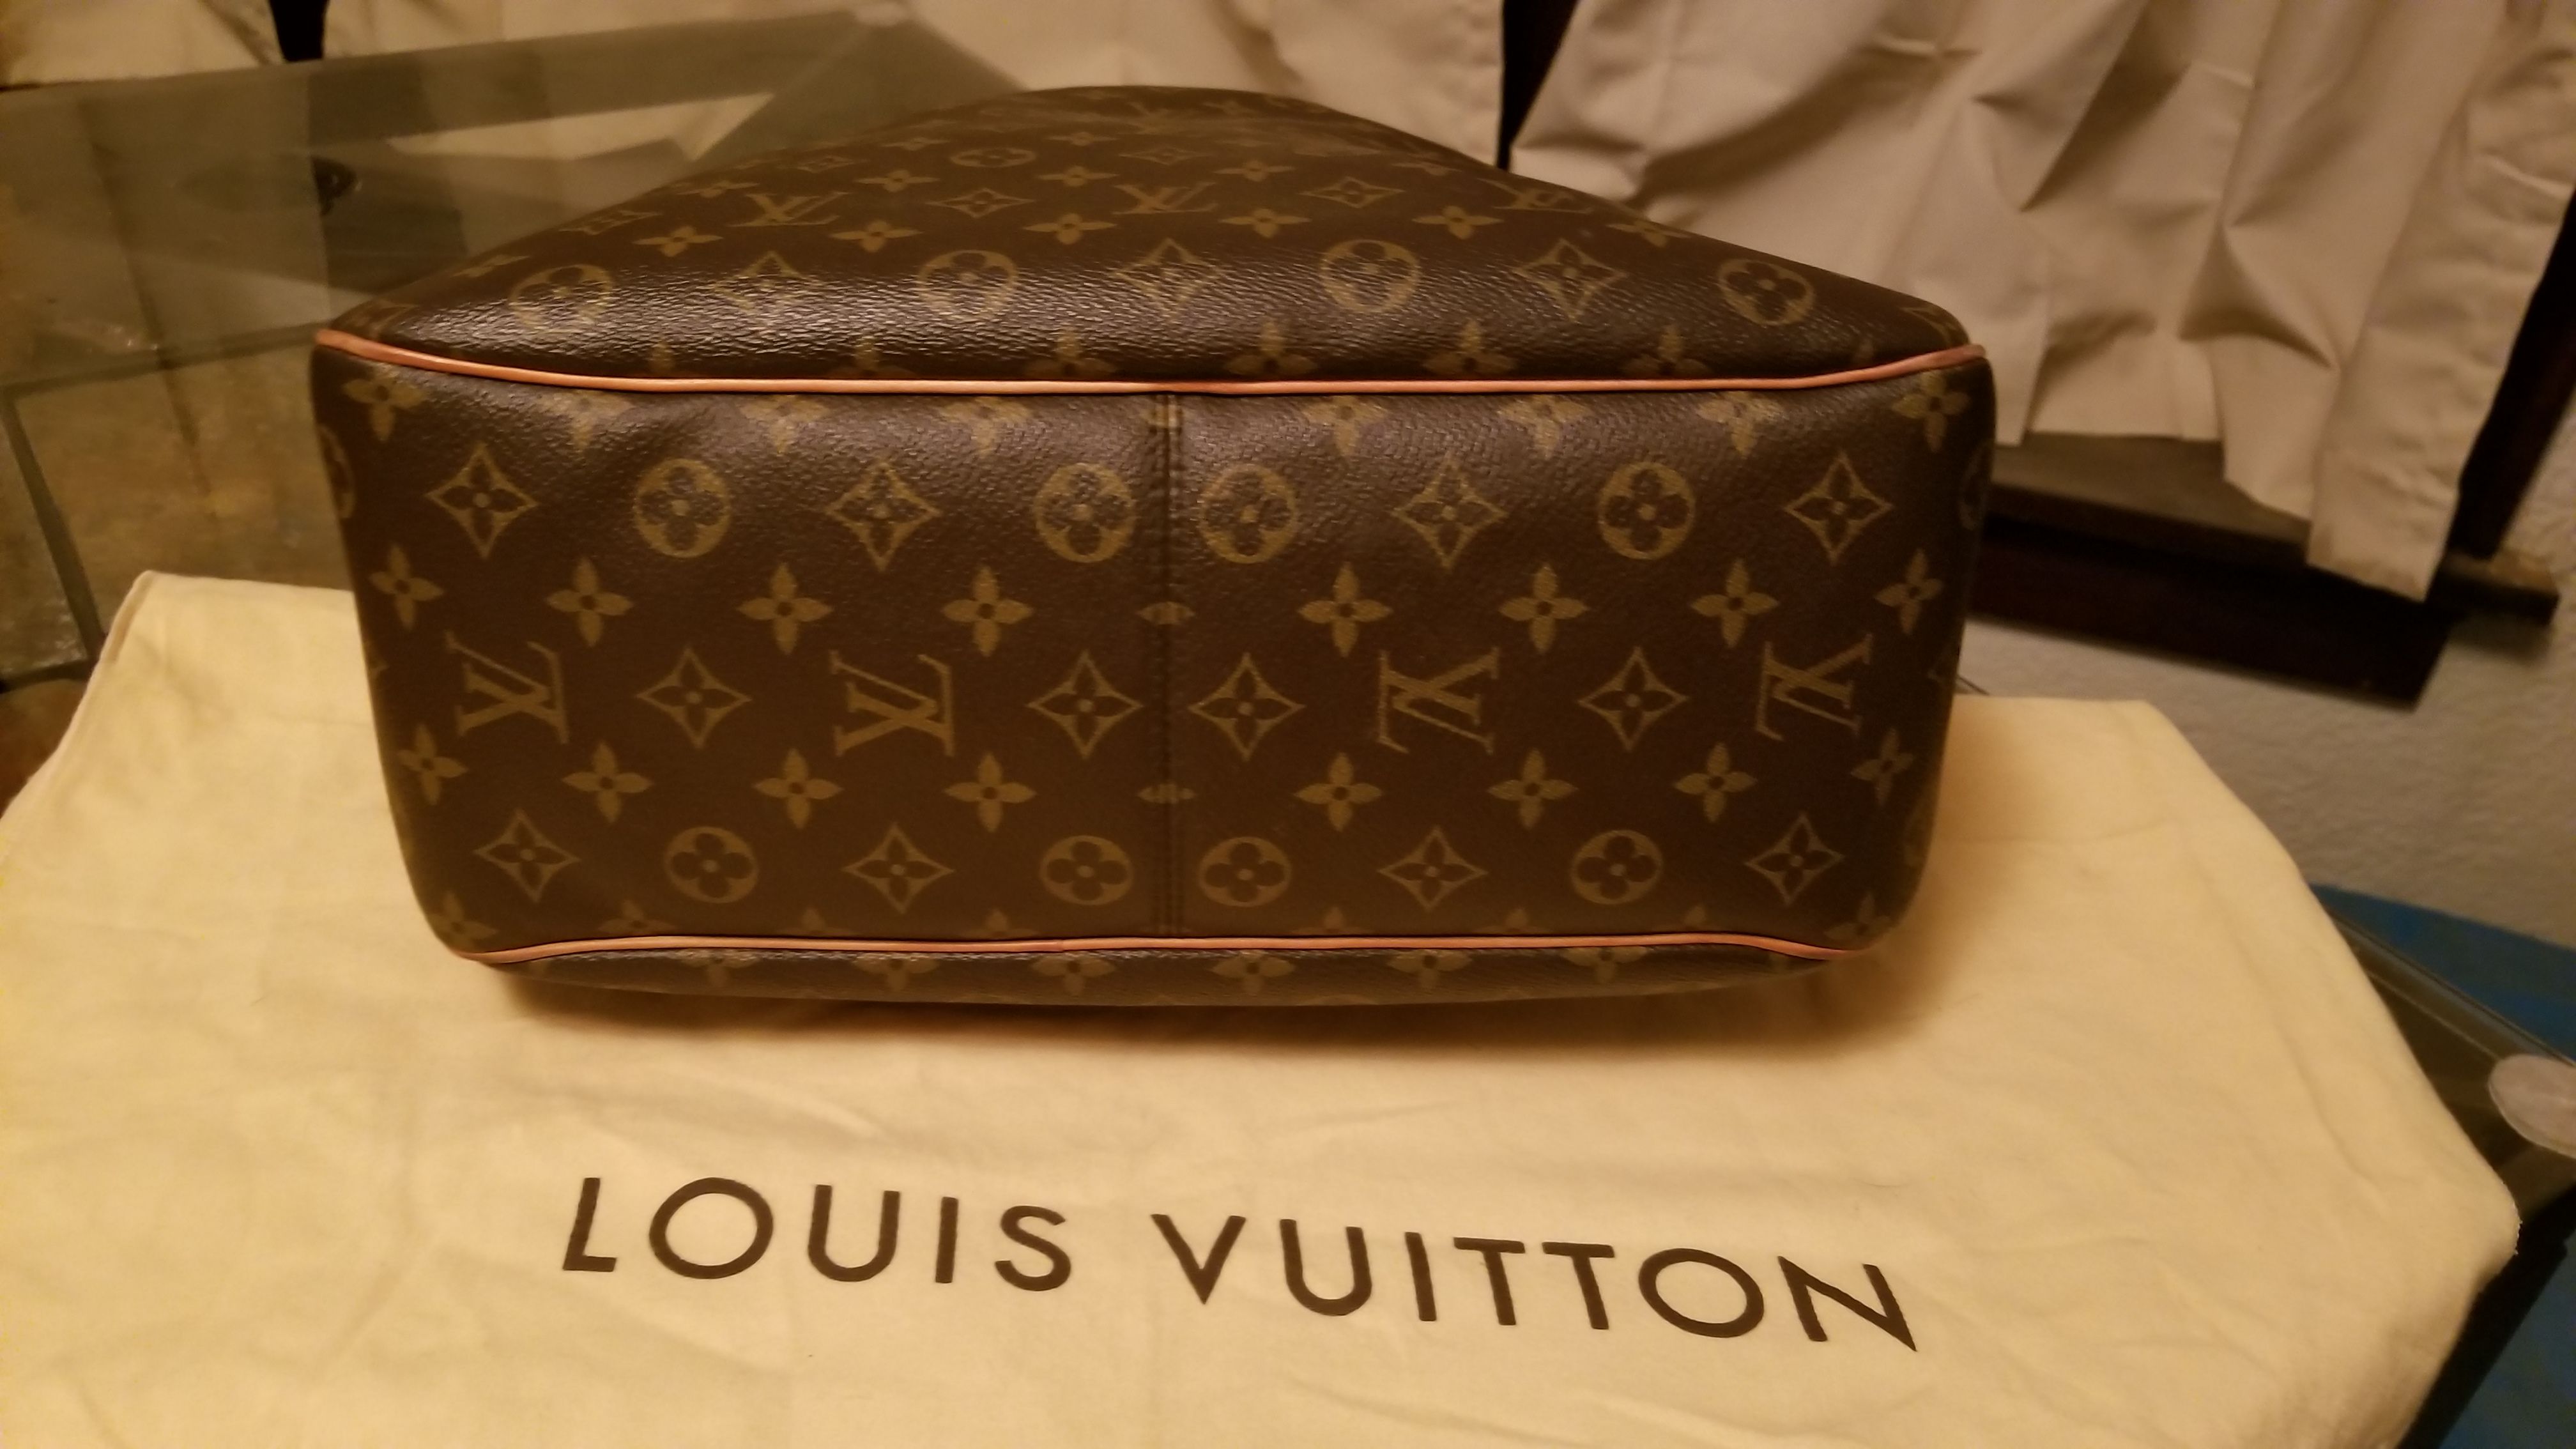 GENUINE LOUIS VUITTON GRACEFULL PM BAG for Sale in Fairfax, VA - OfferUp